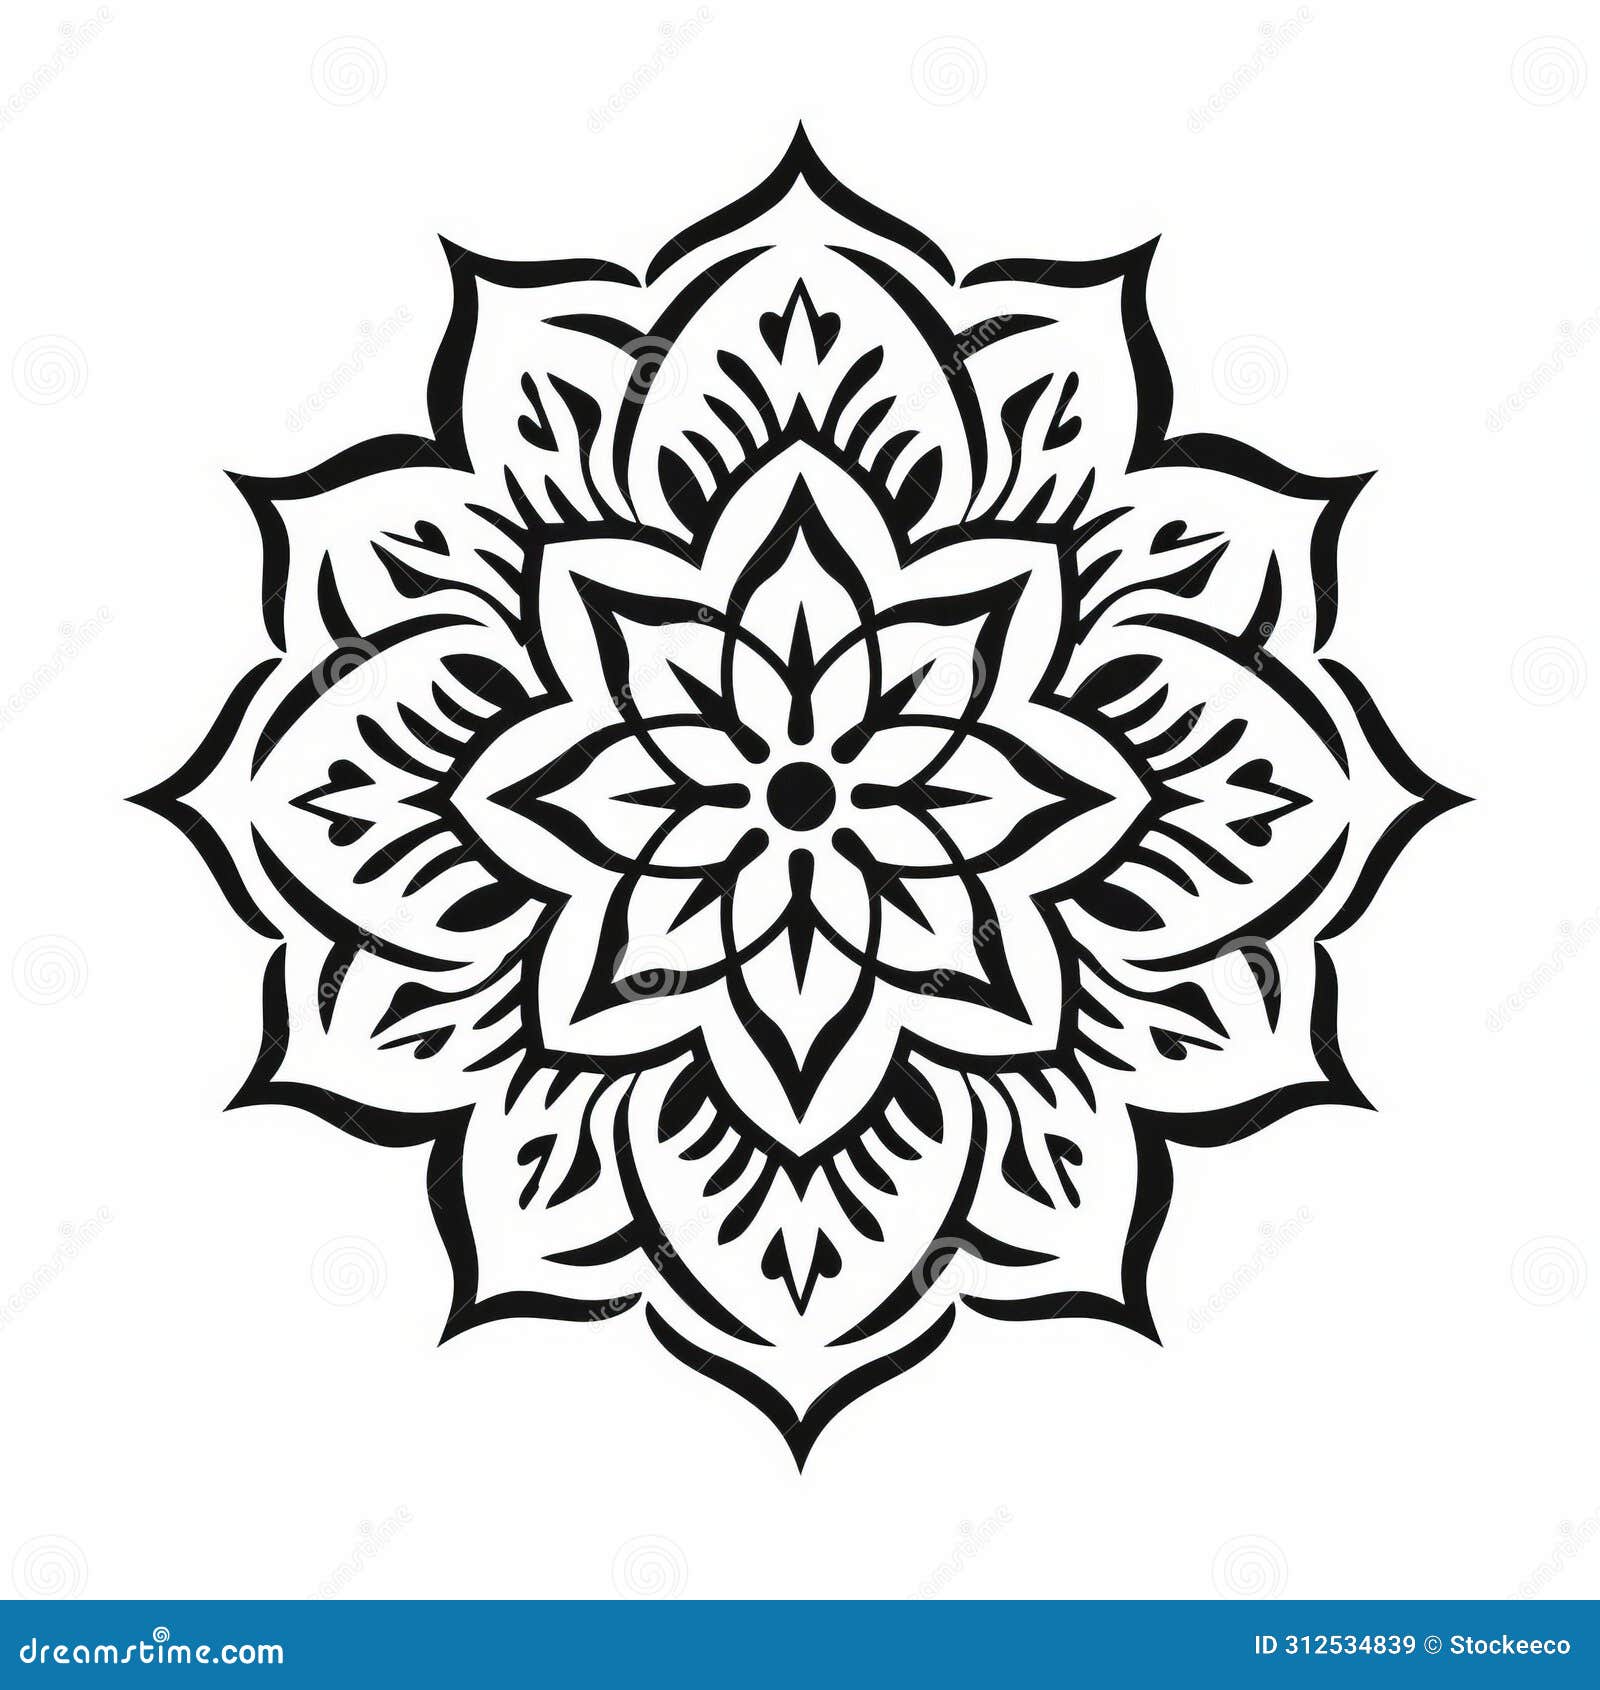 black mandala flower : minimalistic stenciled iconography